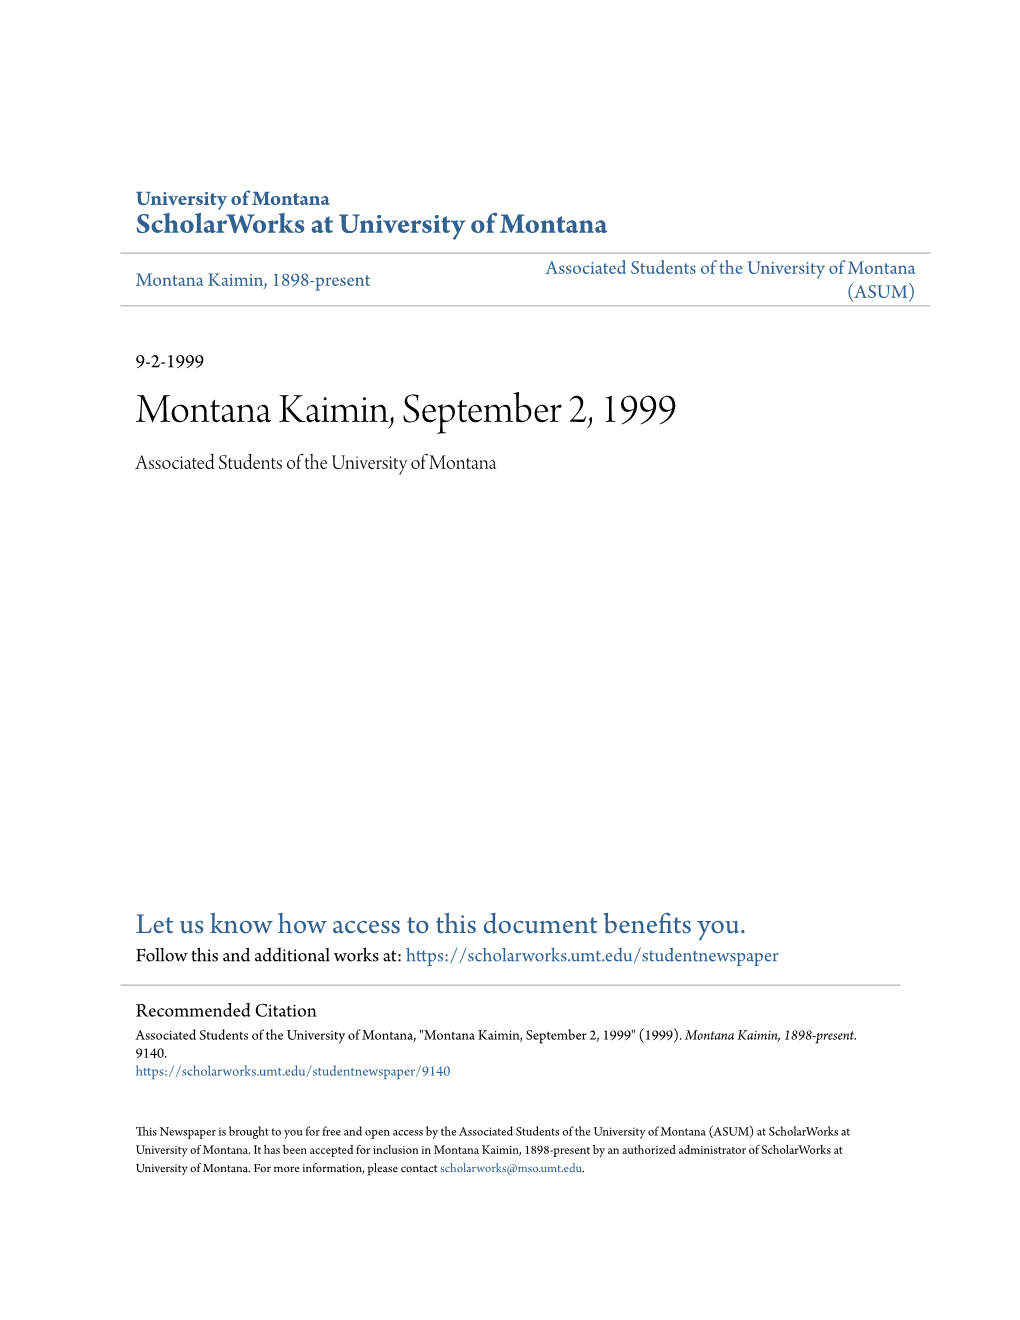 Montana Kaimin, September 2, 1999 Associated Students of the University of Montana